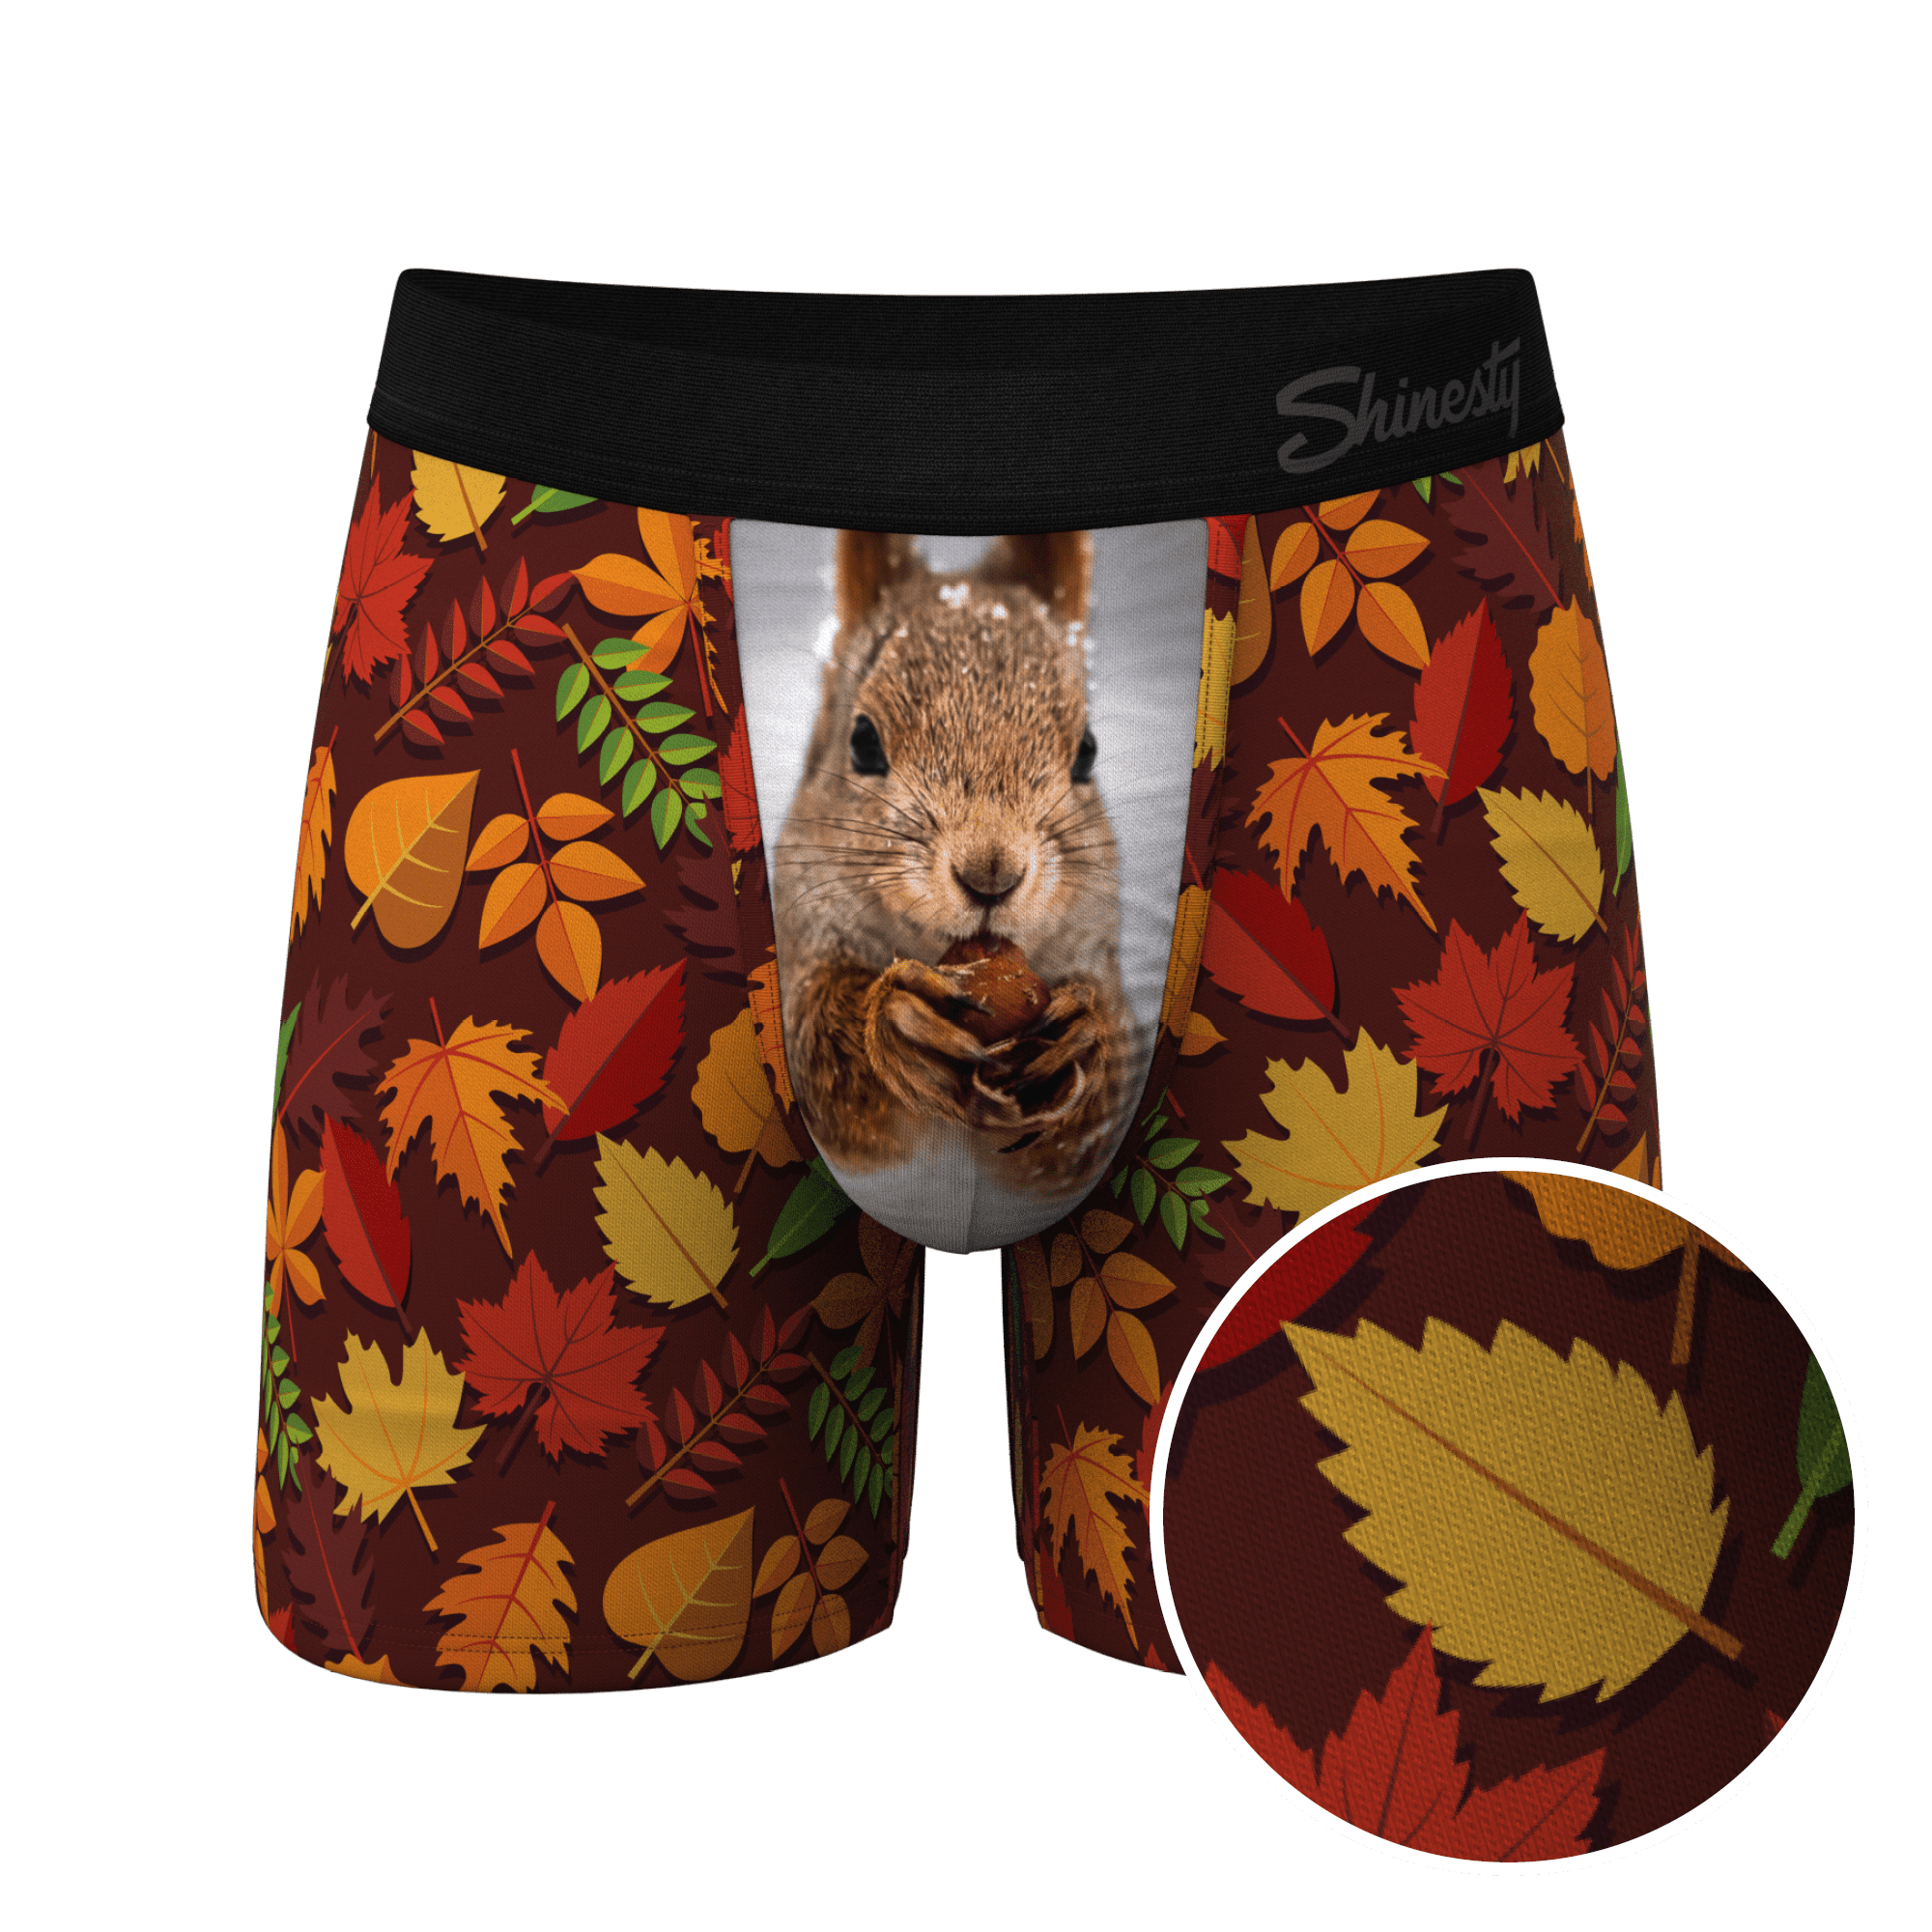 The Acorn Hoard - Shinesty Squirrel Ball Hammock Pouch Underwear 2X 